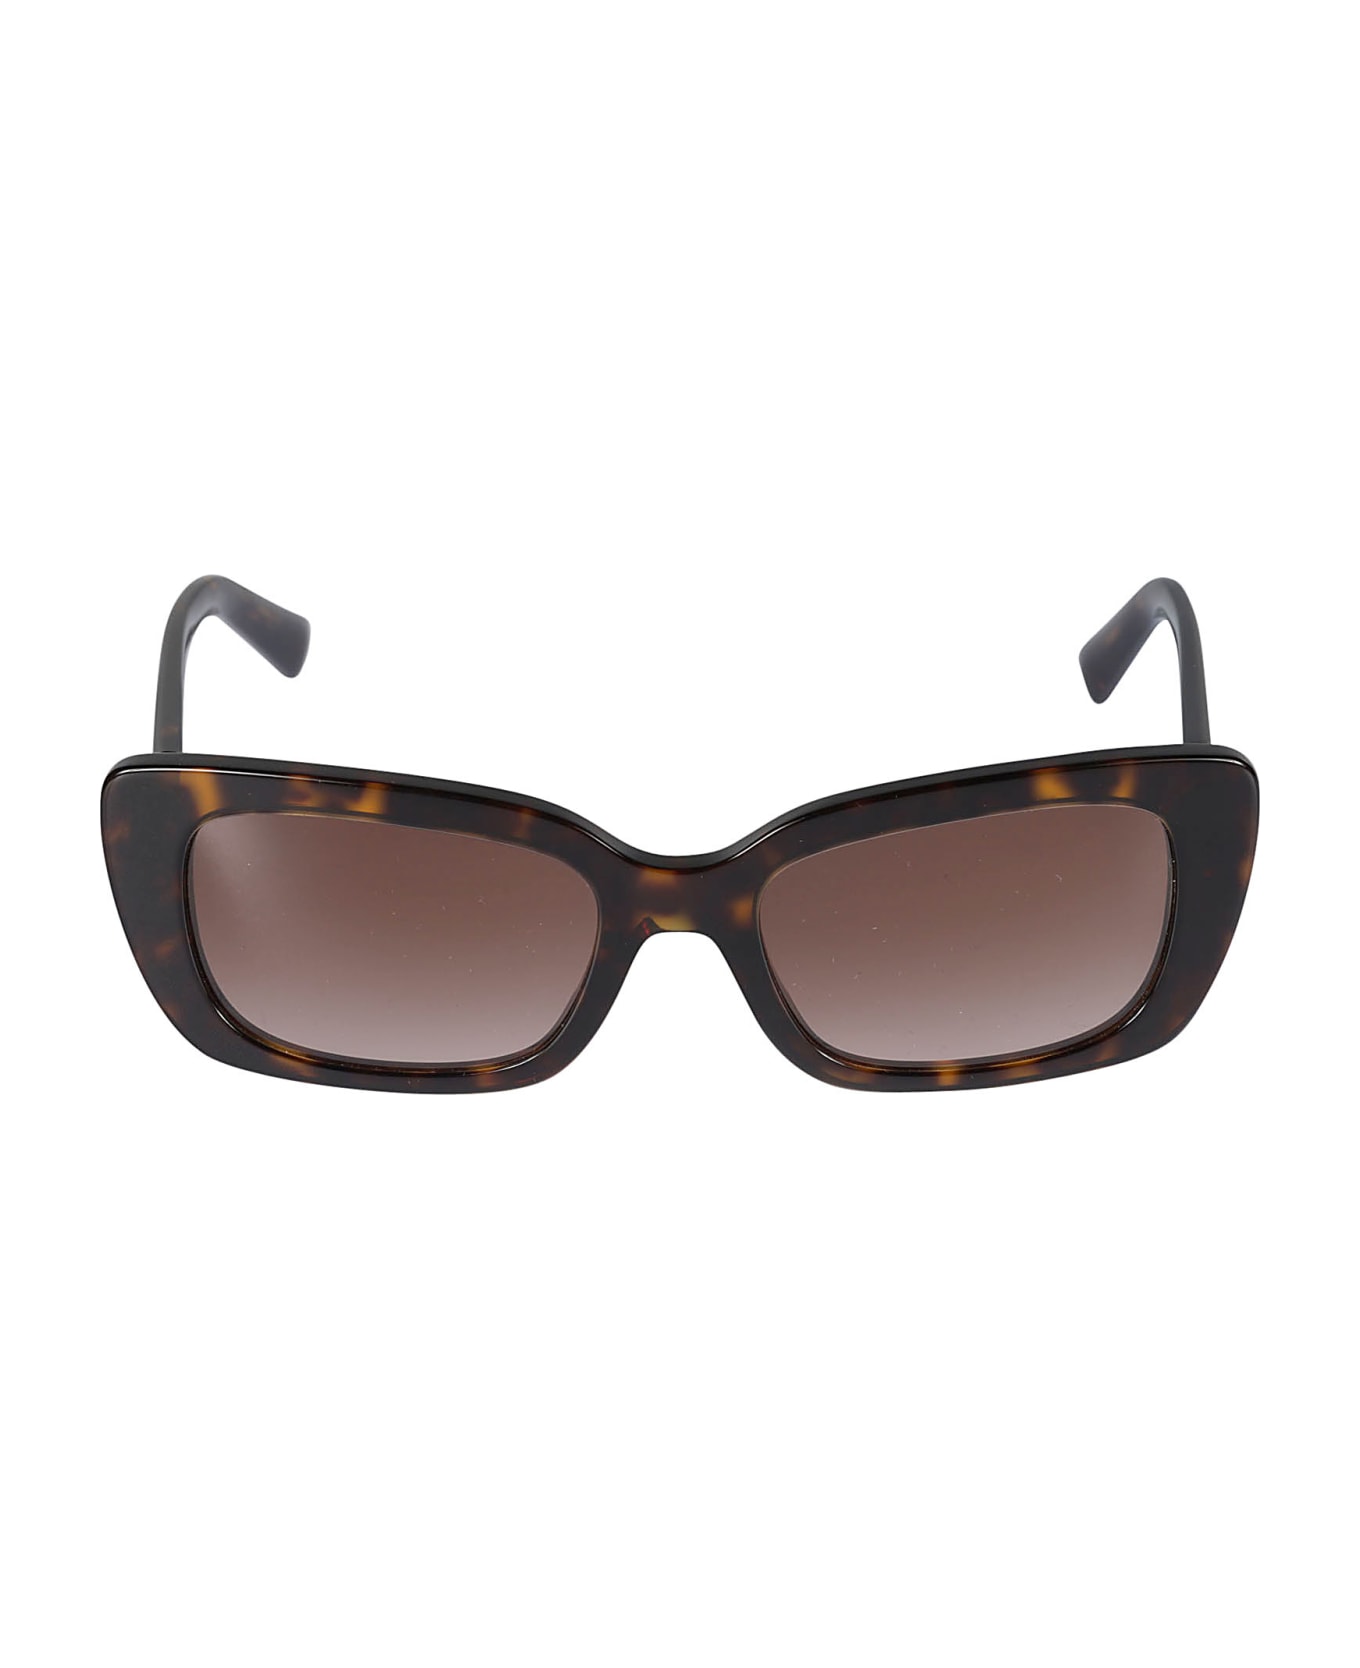 Valentino Eyewear Sole500213 Sunglasses - 500213